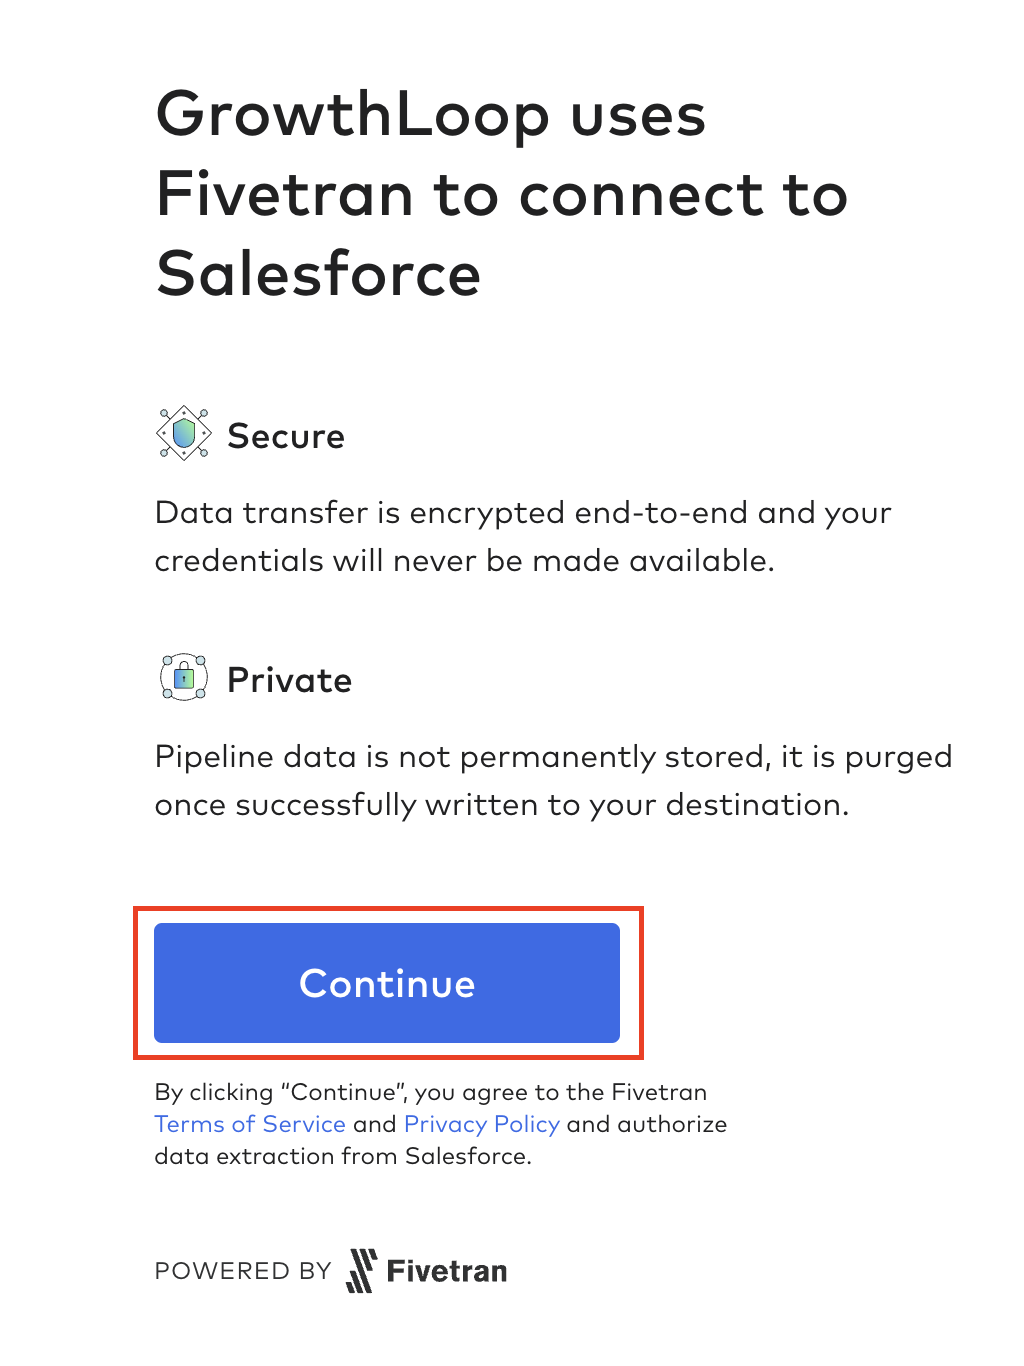 fivetran authentication